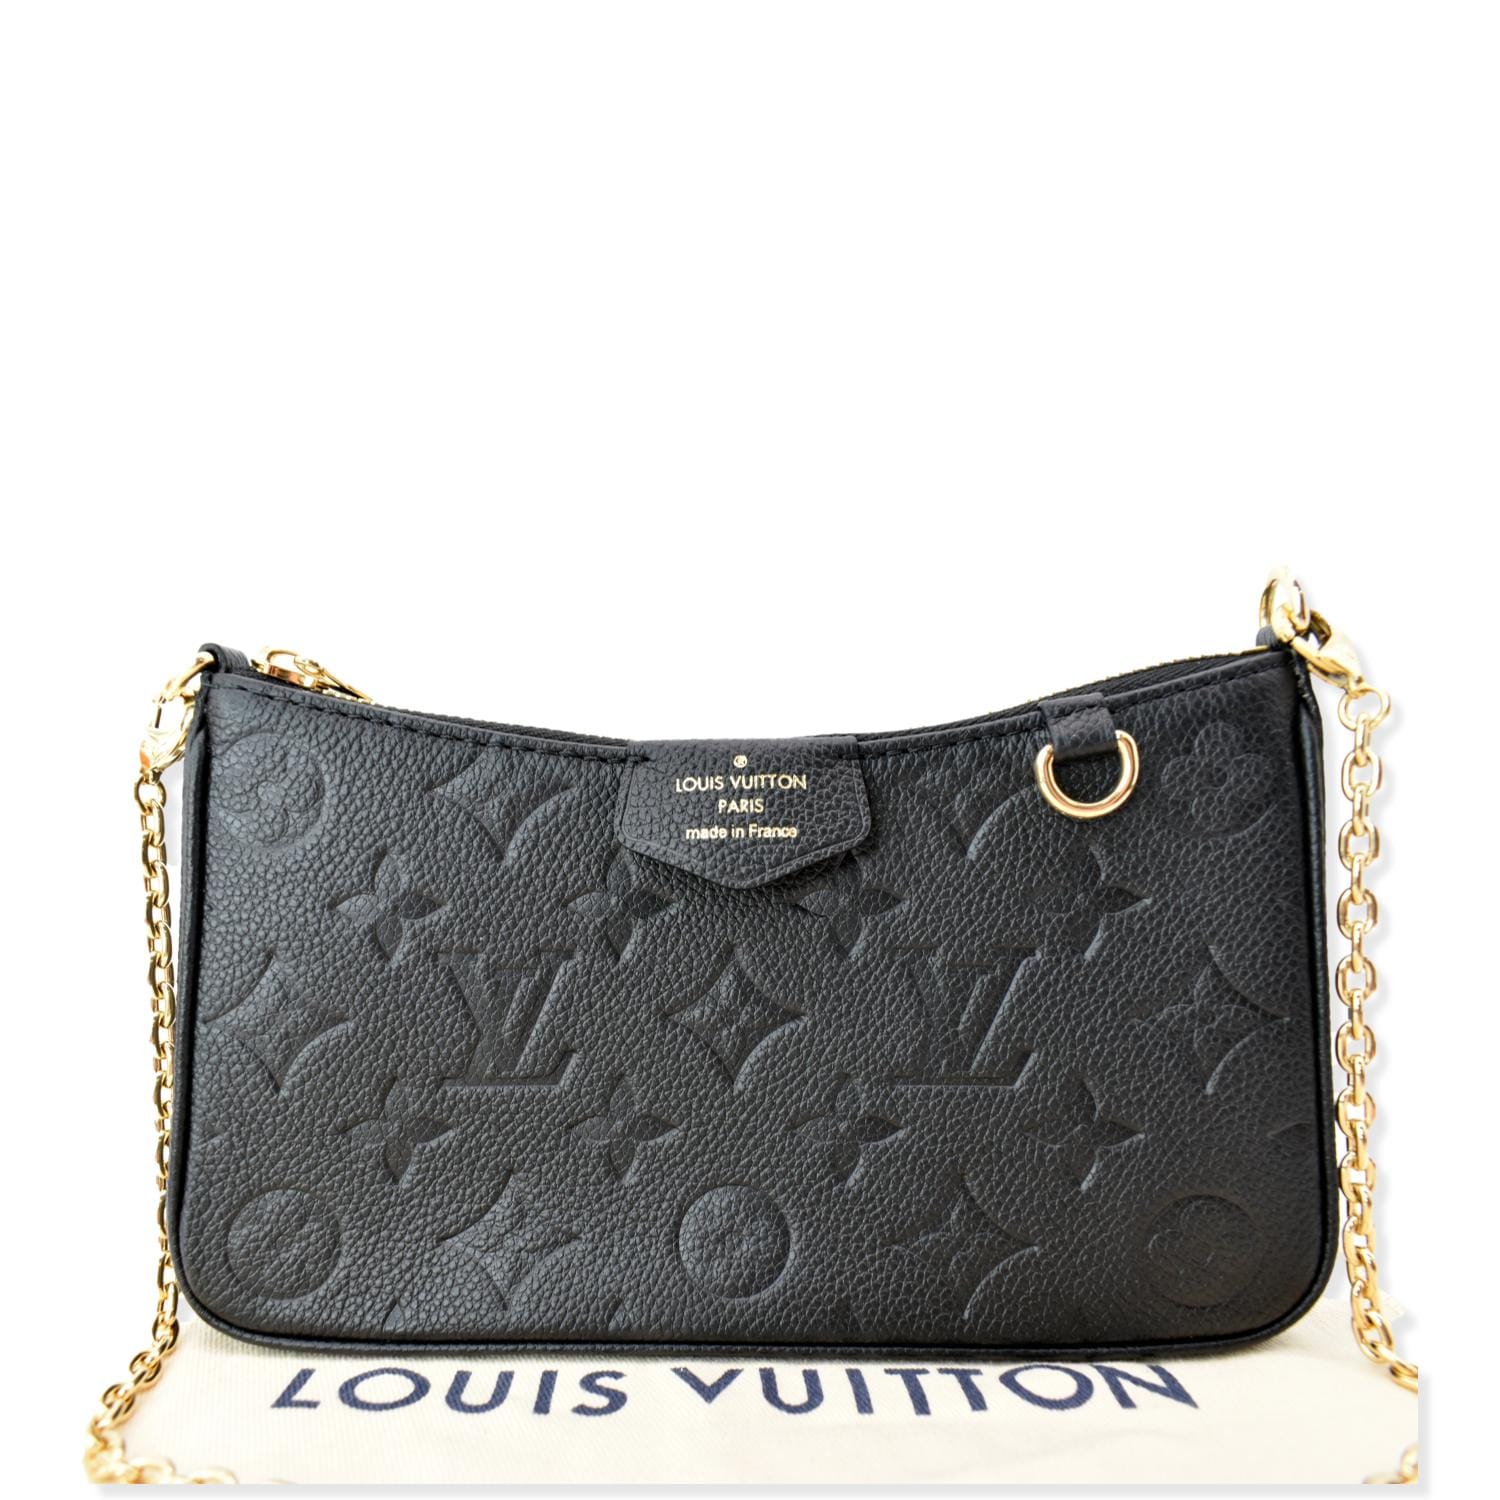 ❌ SOLD ❌ Louis Vuitton Adjustable Vachetta Strap 💰 399 The